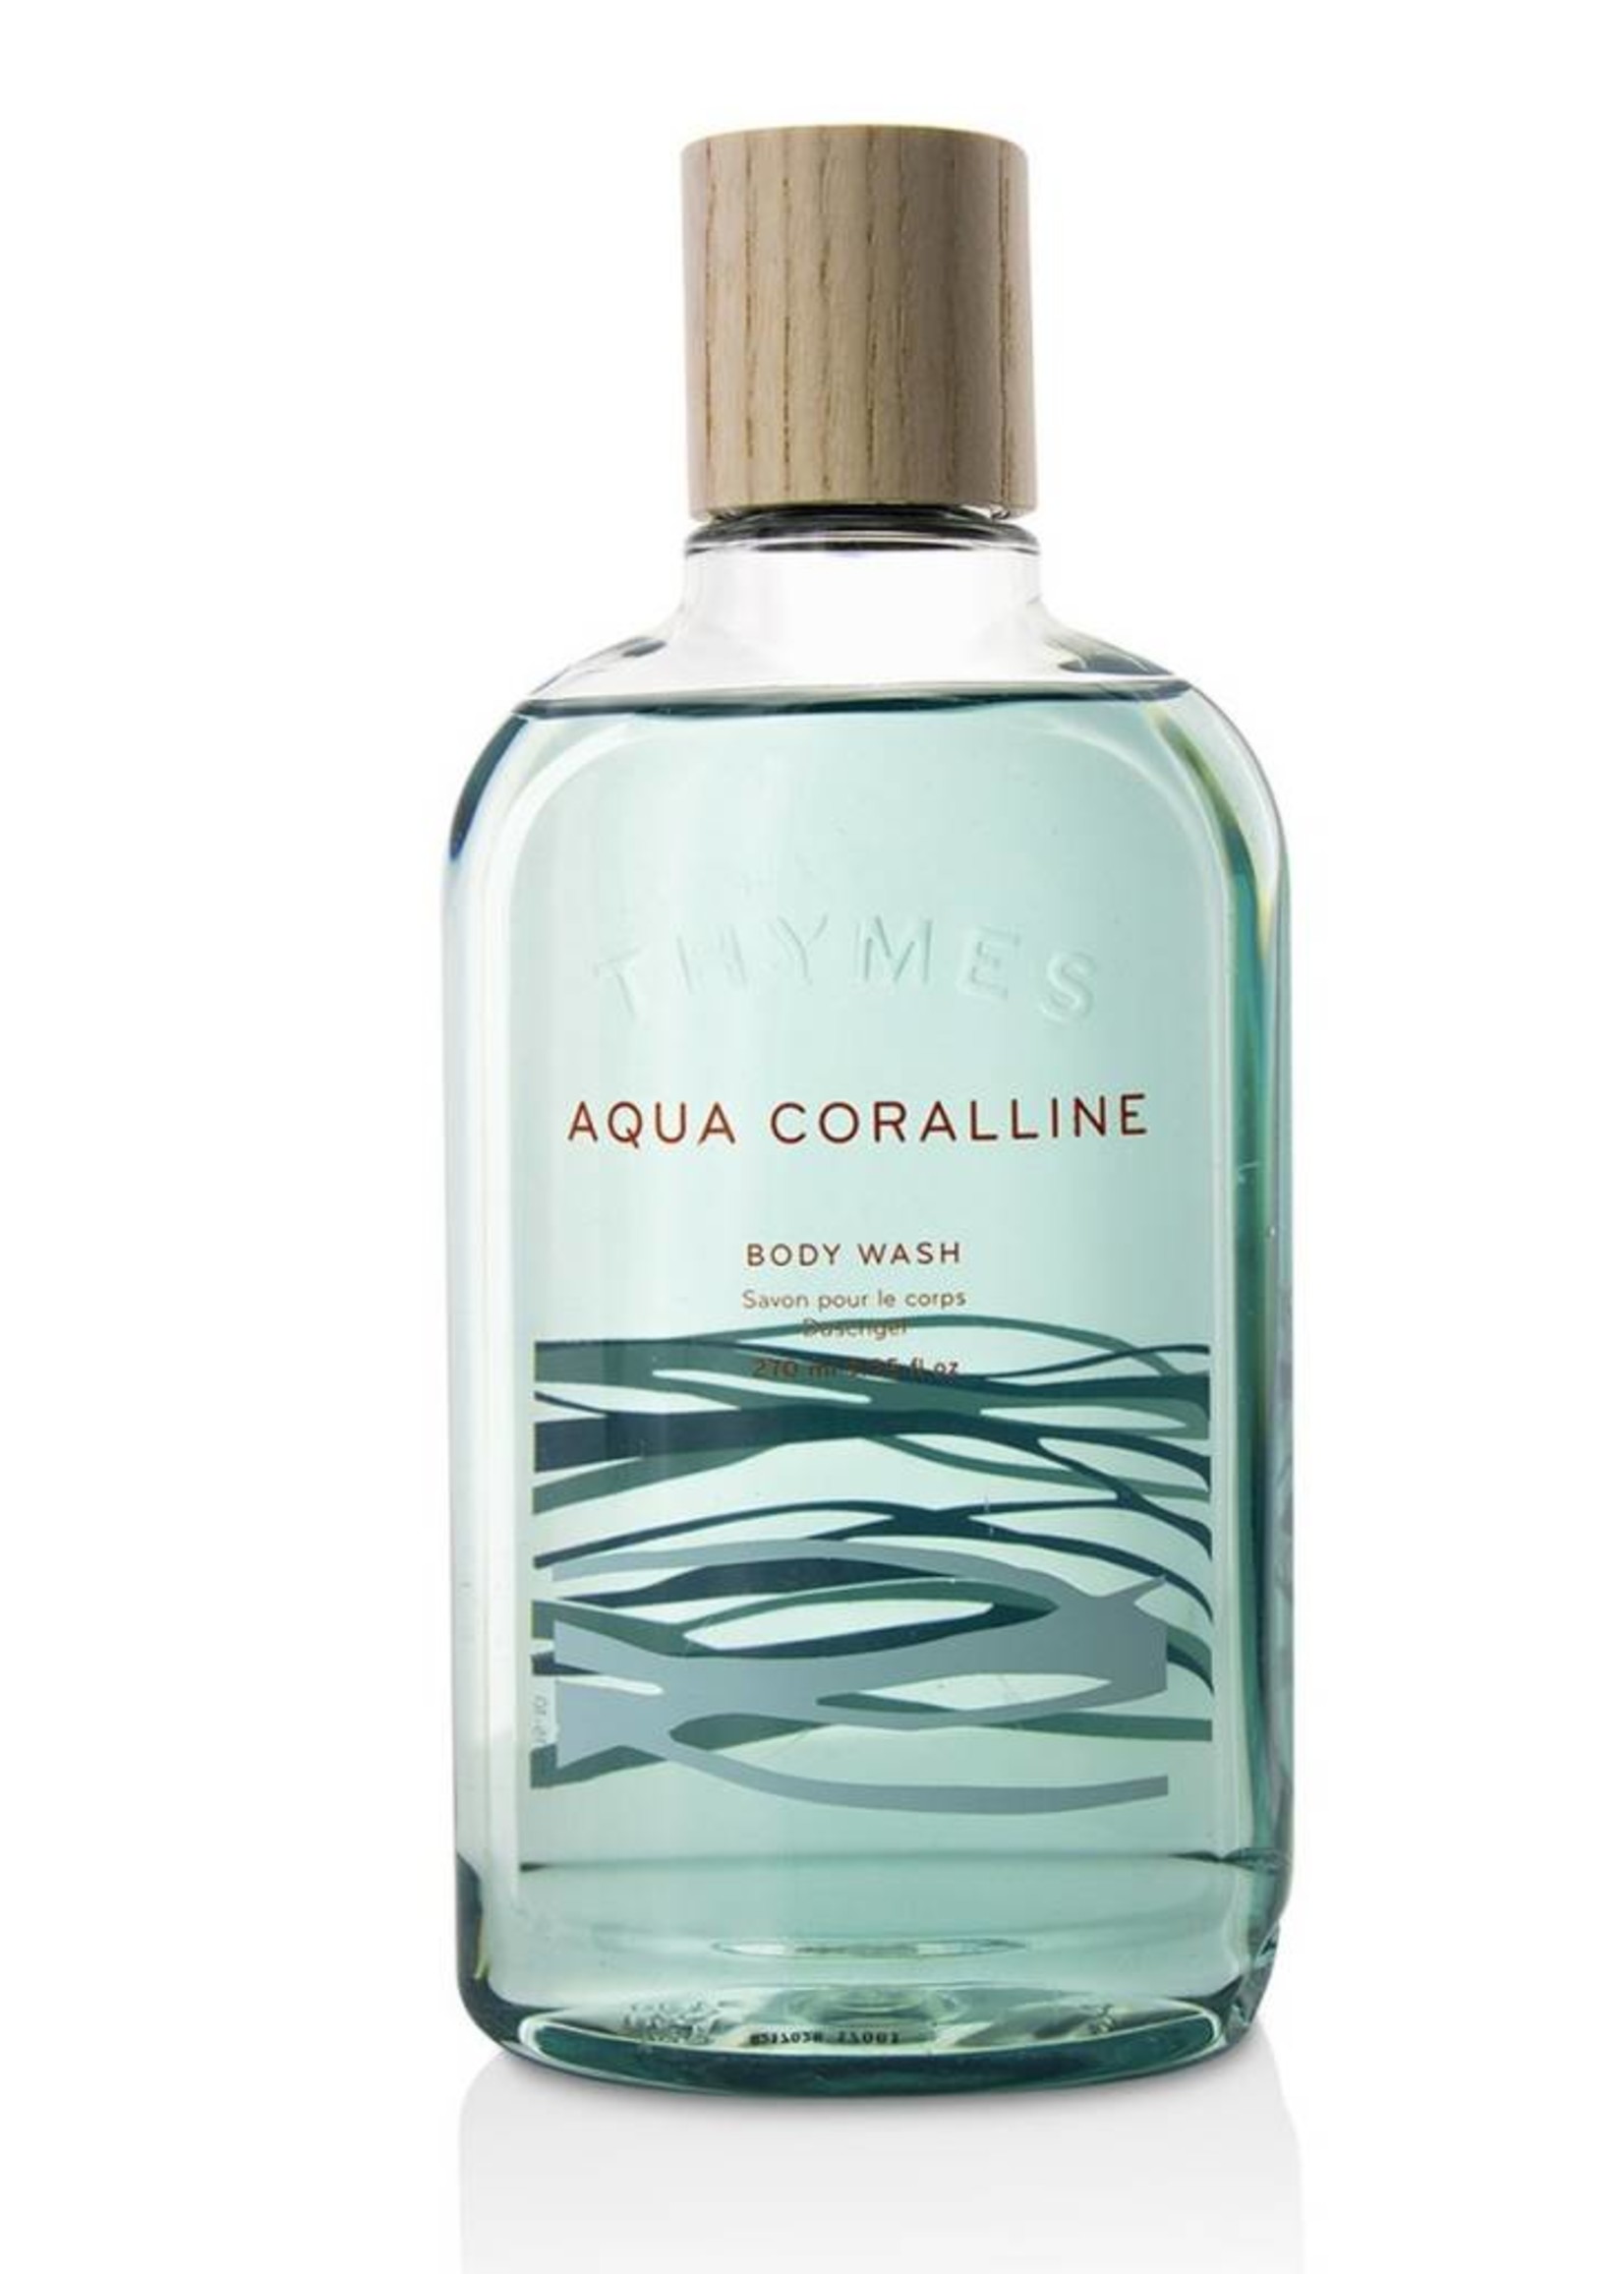 Aqua Coralline Body Wash